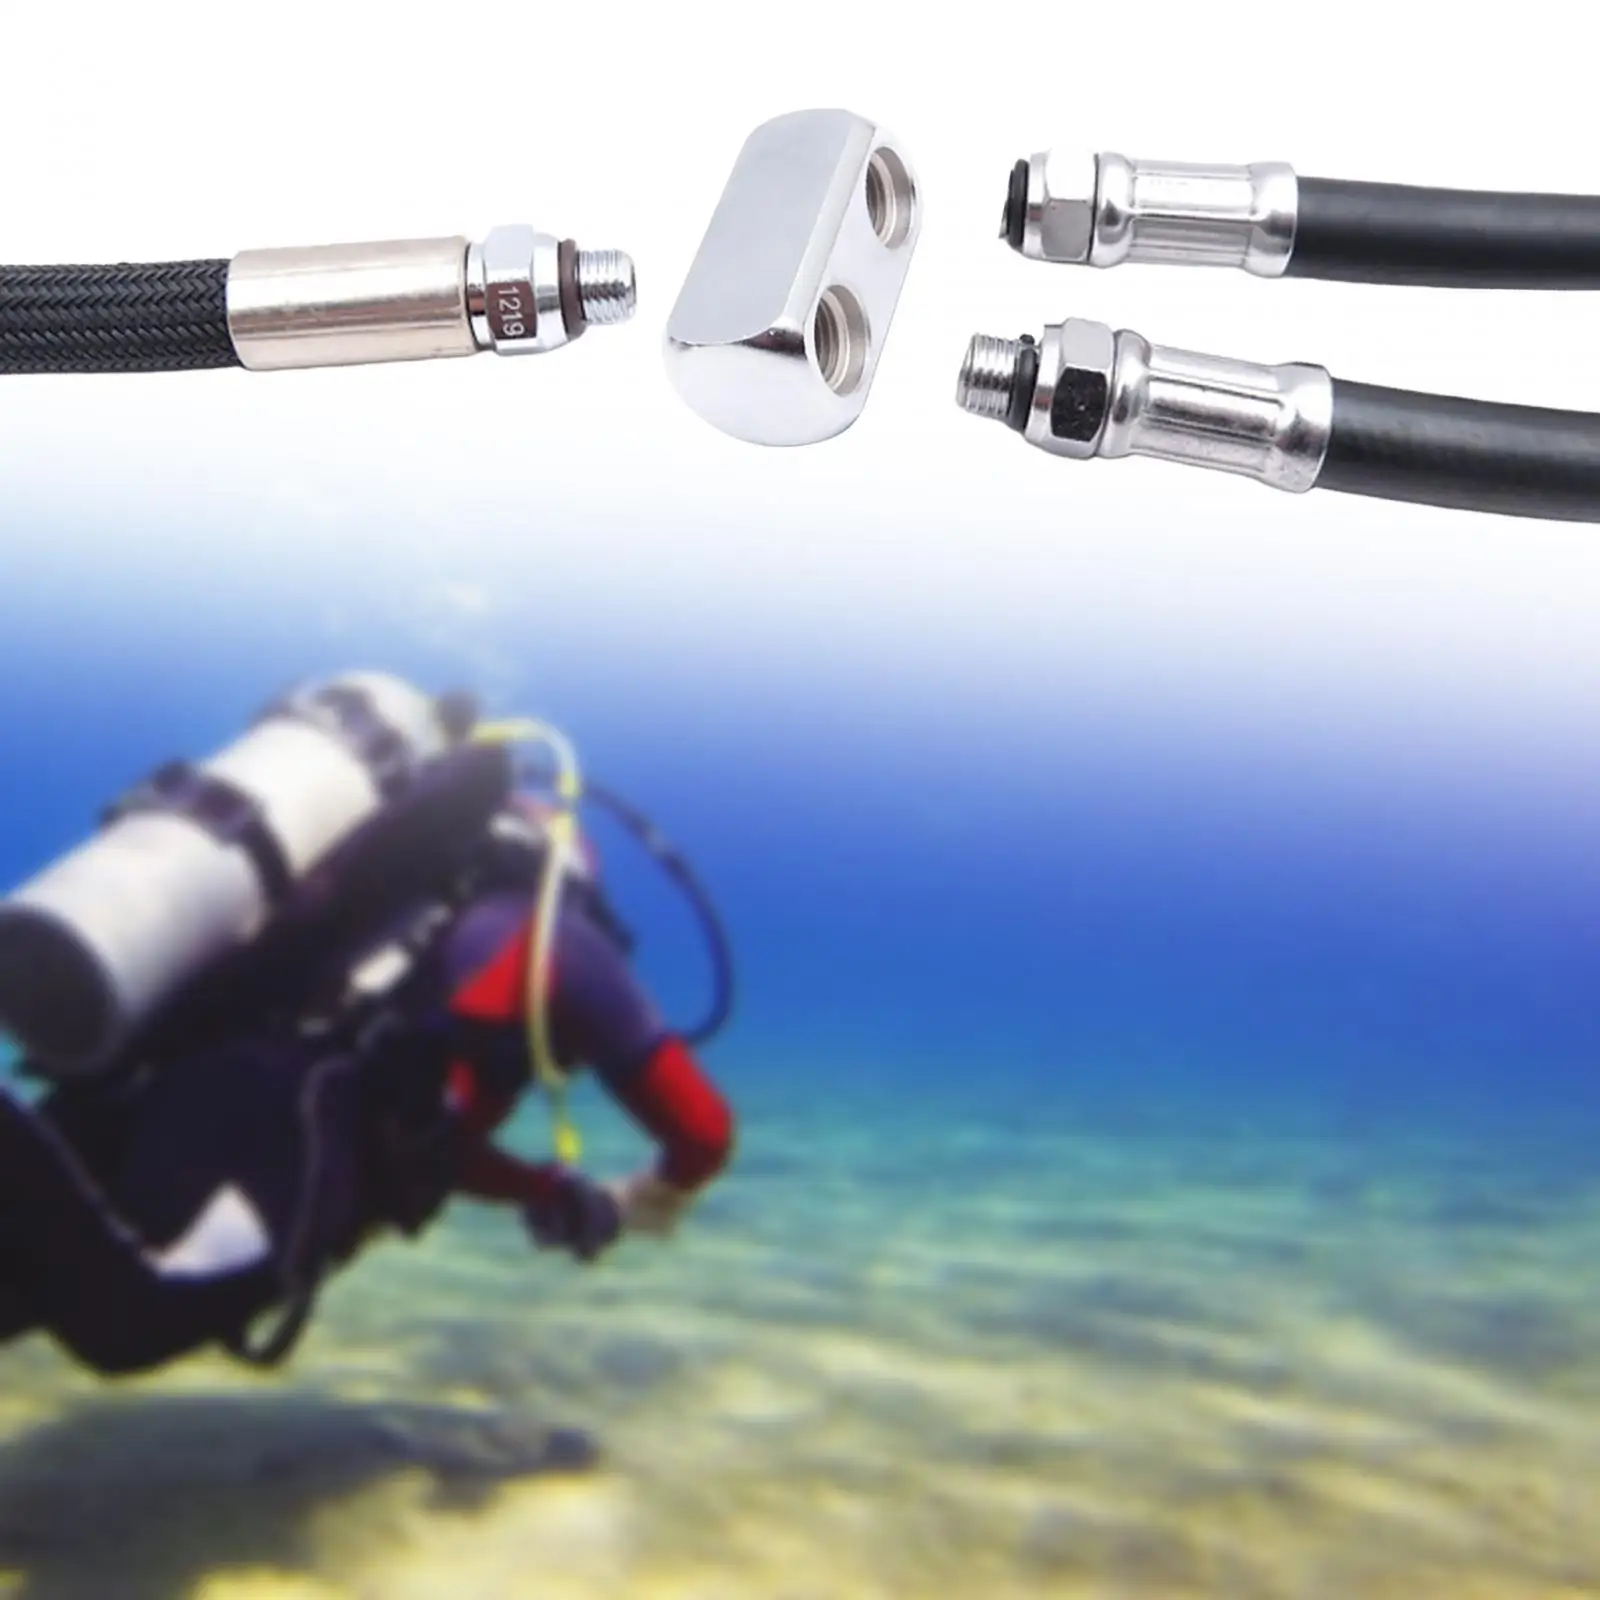 Scuba Diving Regulator Adapter Fitting Insert Connector Free Diving Wear Resistant Outdoor Activities Low Pressure Pipe Adapter